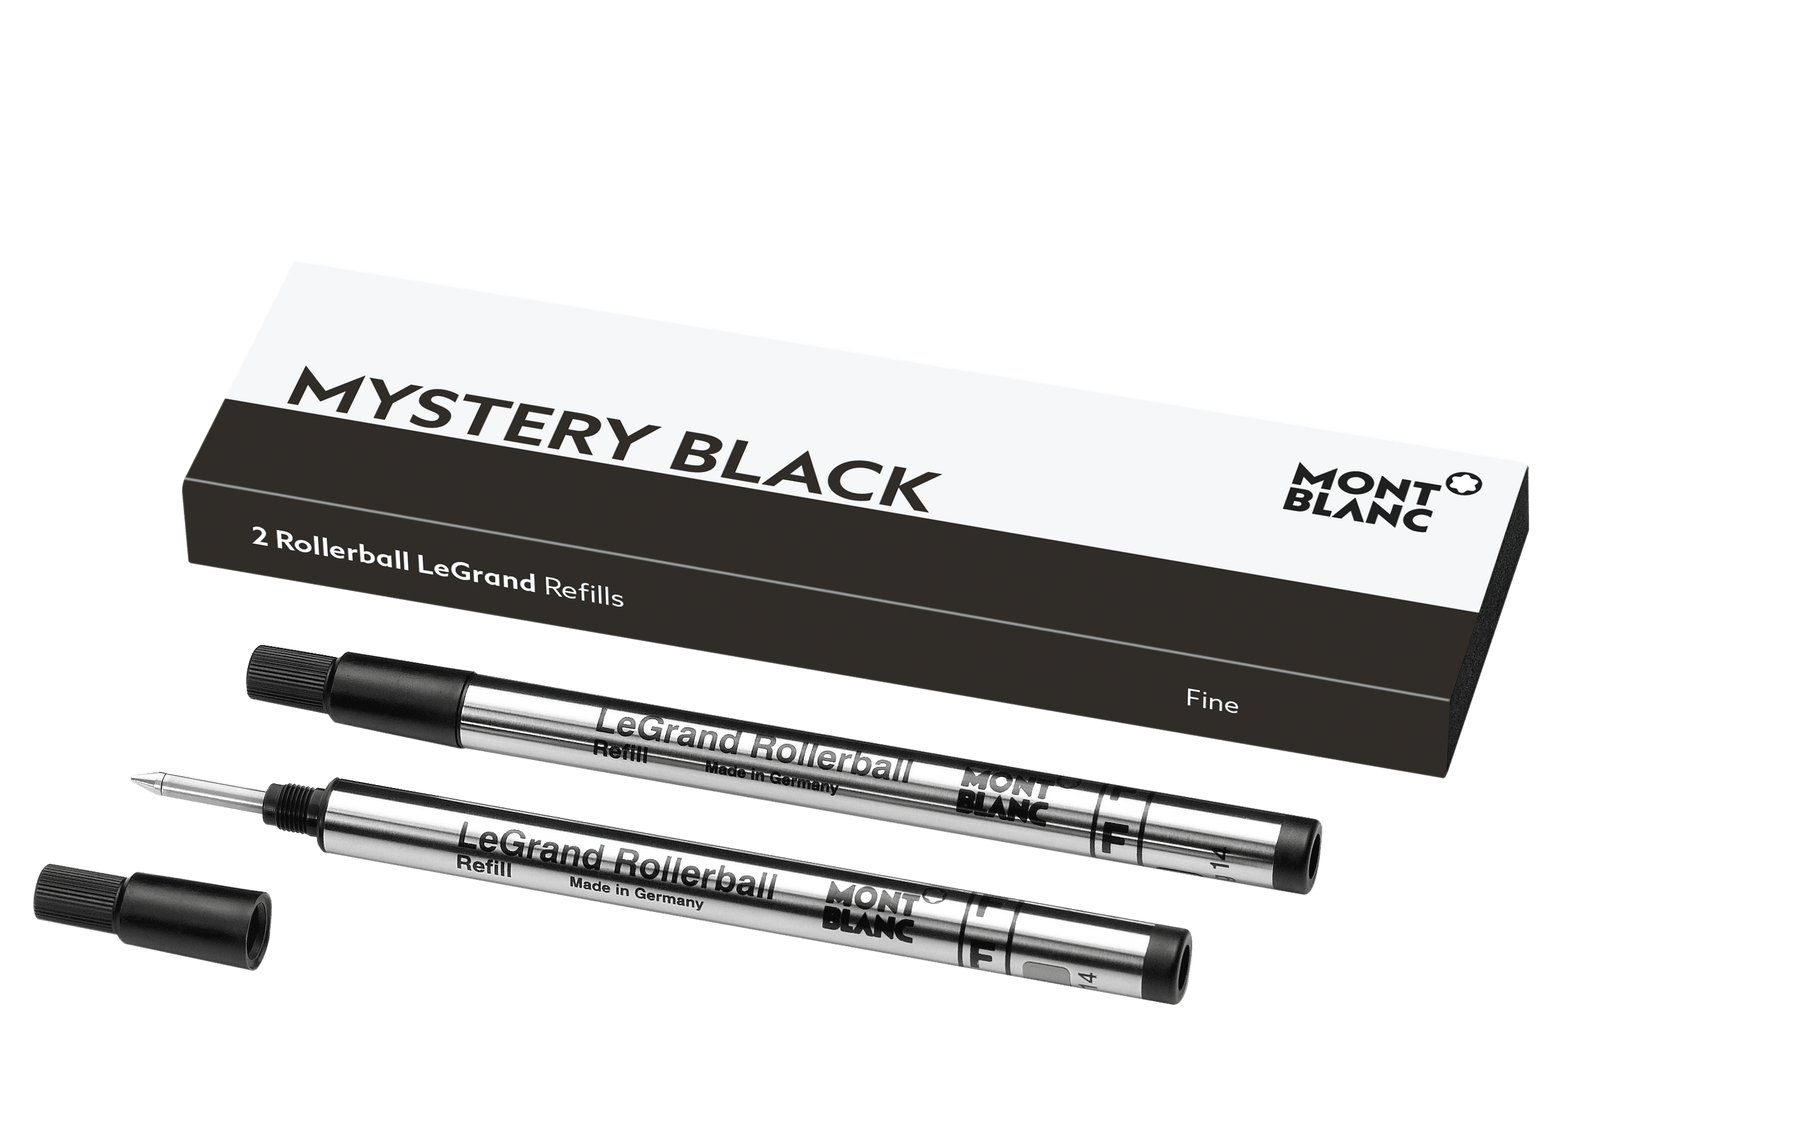 2 Rollerball LeGrand Refills Fine, Mystery Black